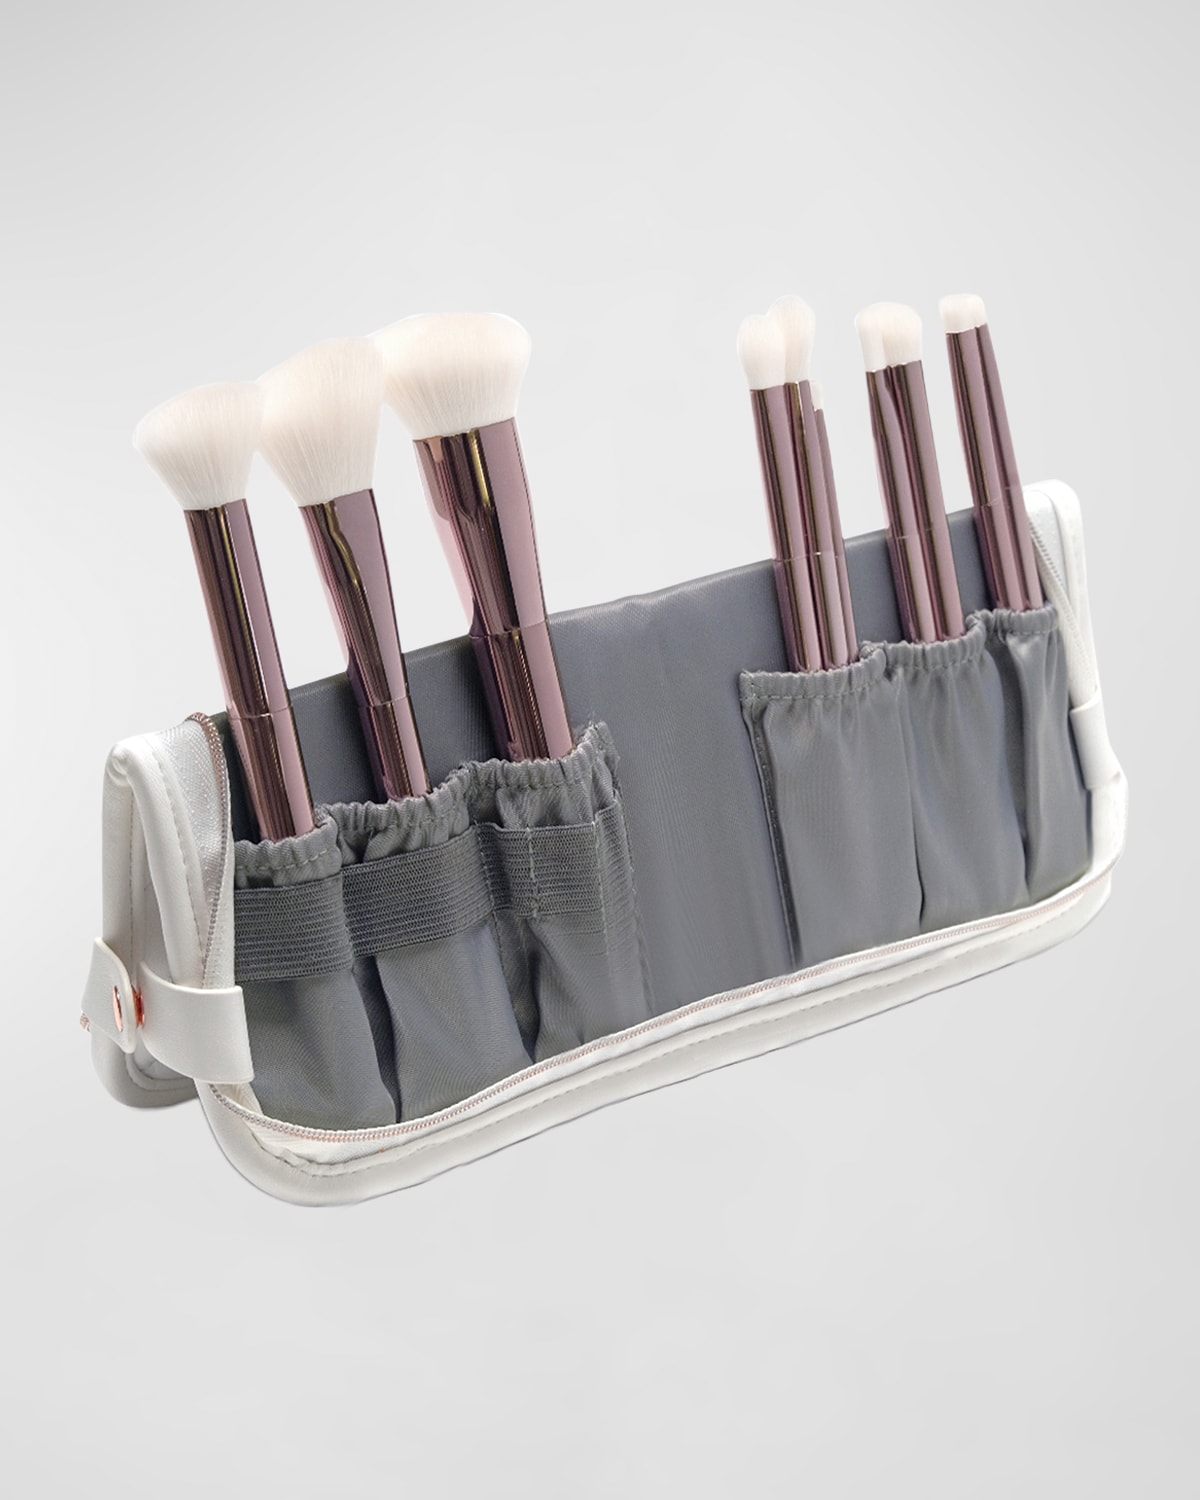 Sustainable Luxury 10-Piece Makeup Brush Set with Vegan Leather Case